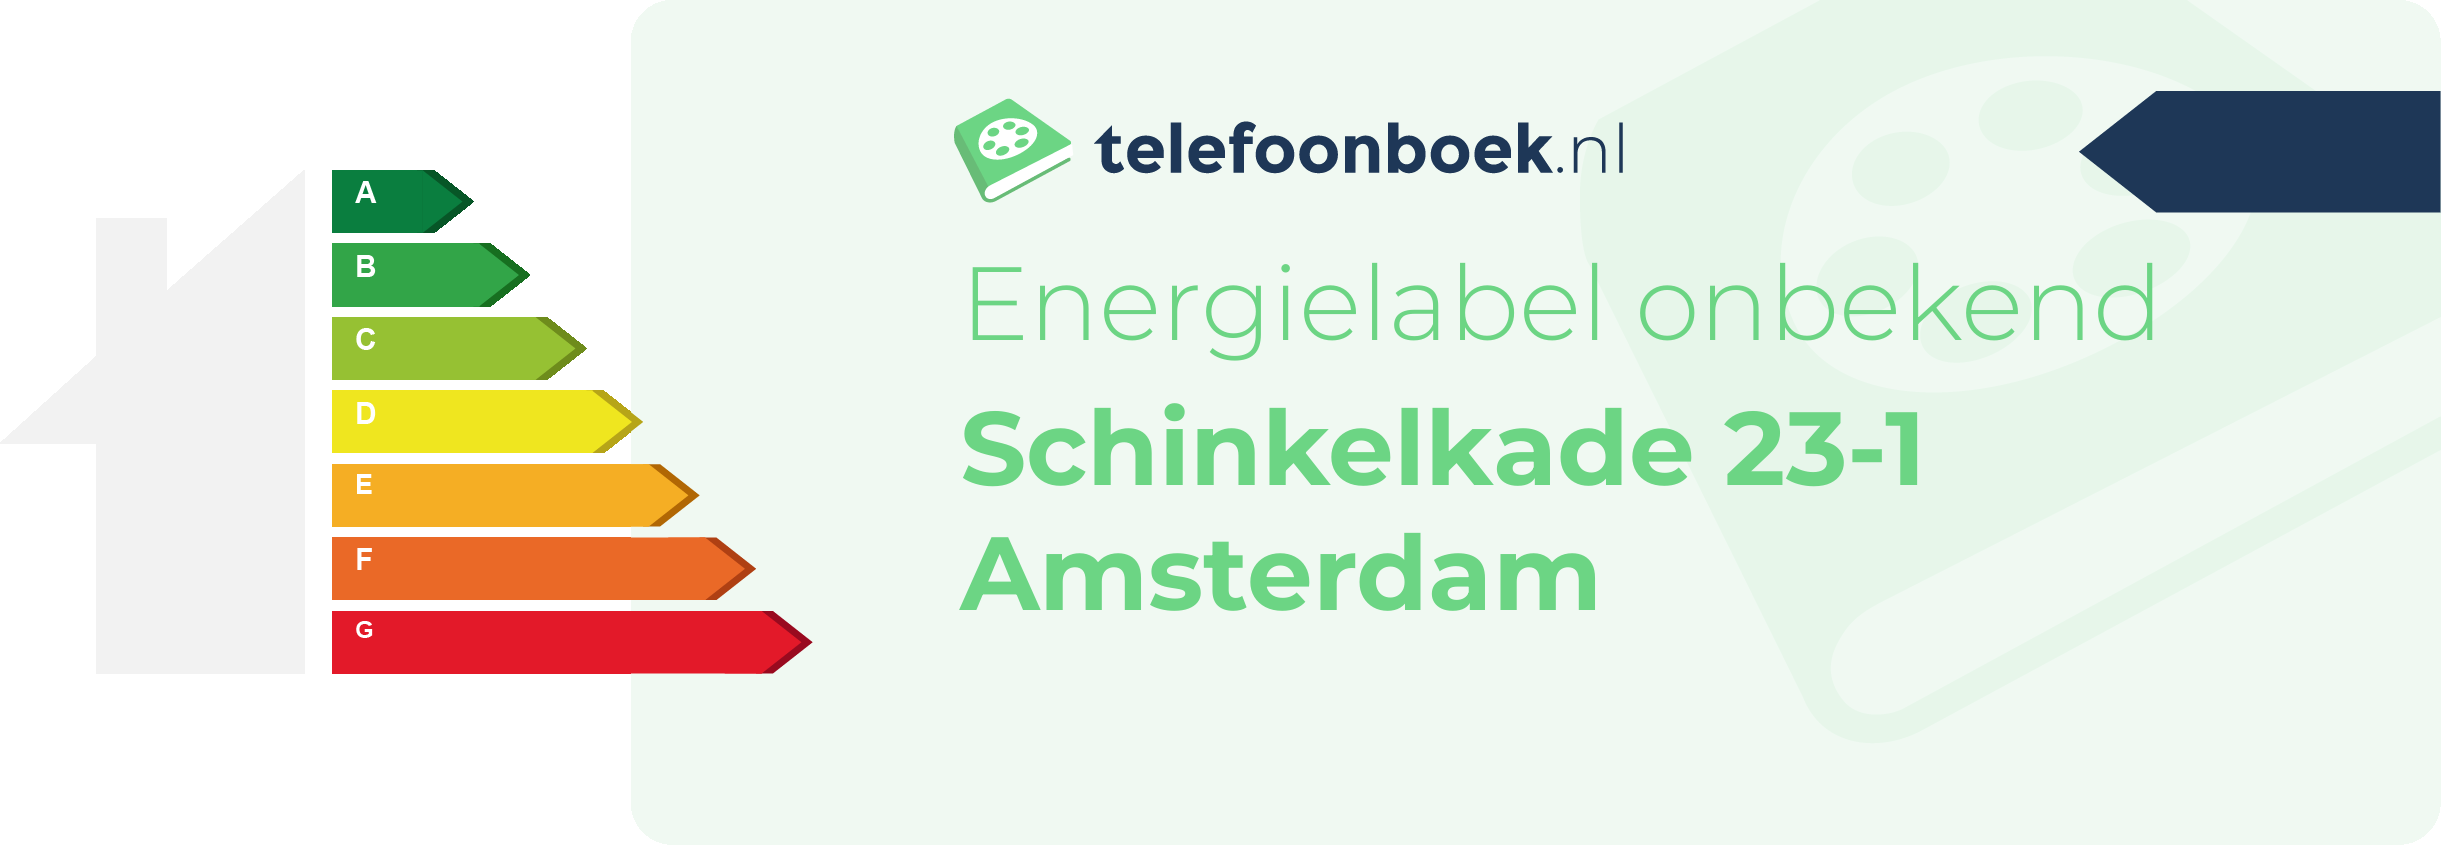 Energielabel Schinkelkade 23-1 Amsterdam